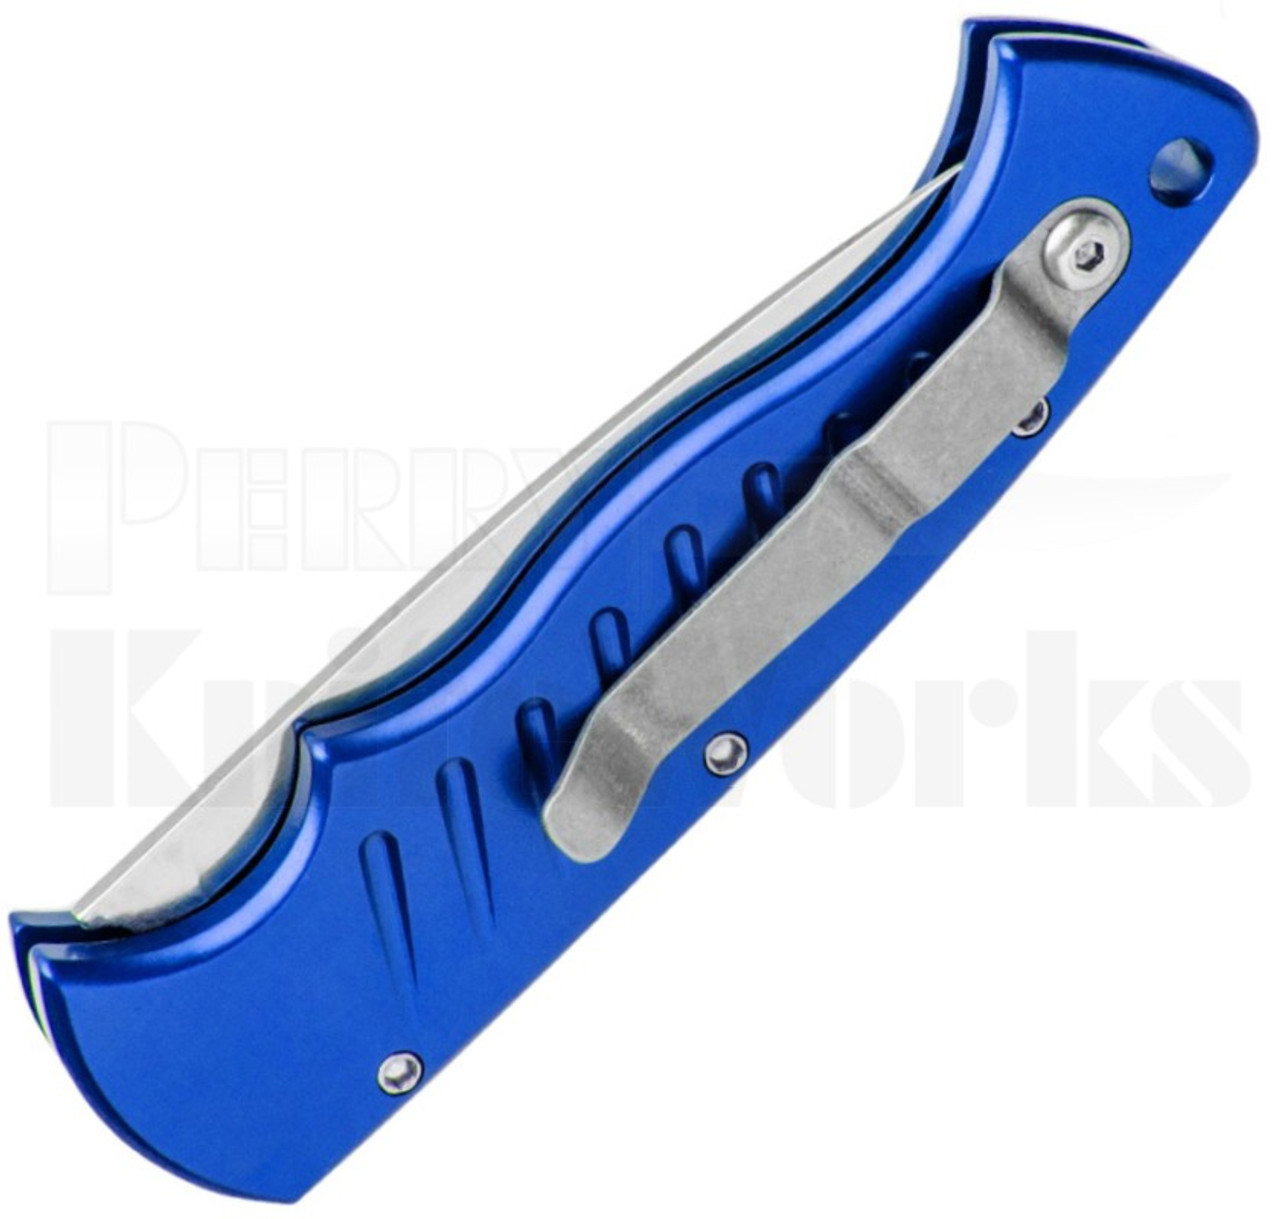 Piranha Pocket Automatic Knife Blue P-1